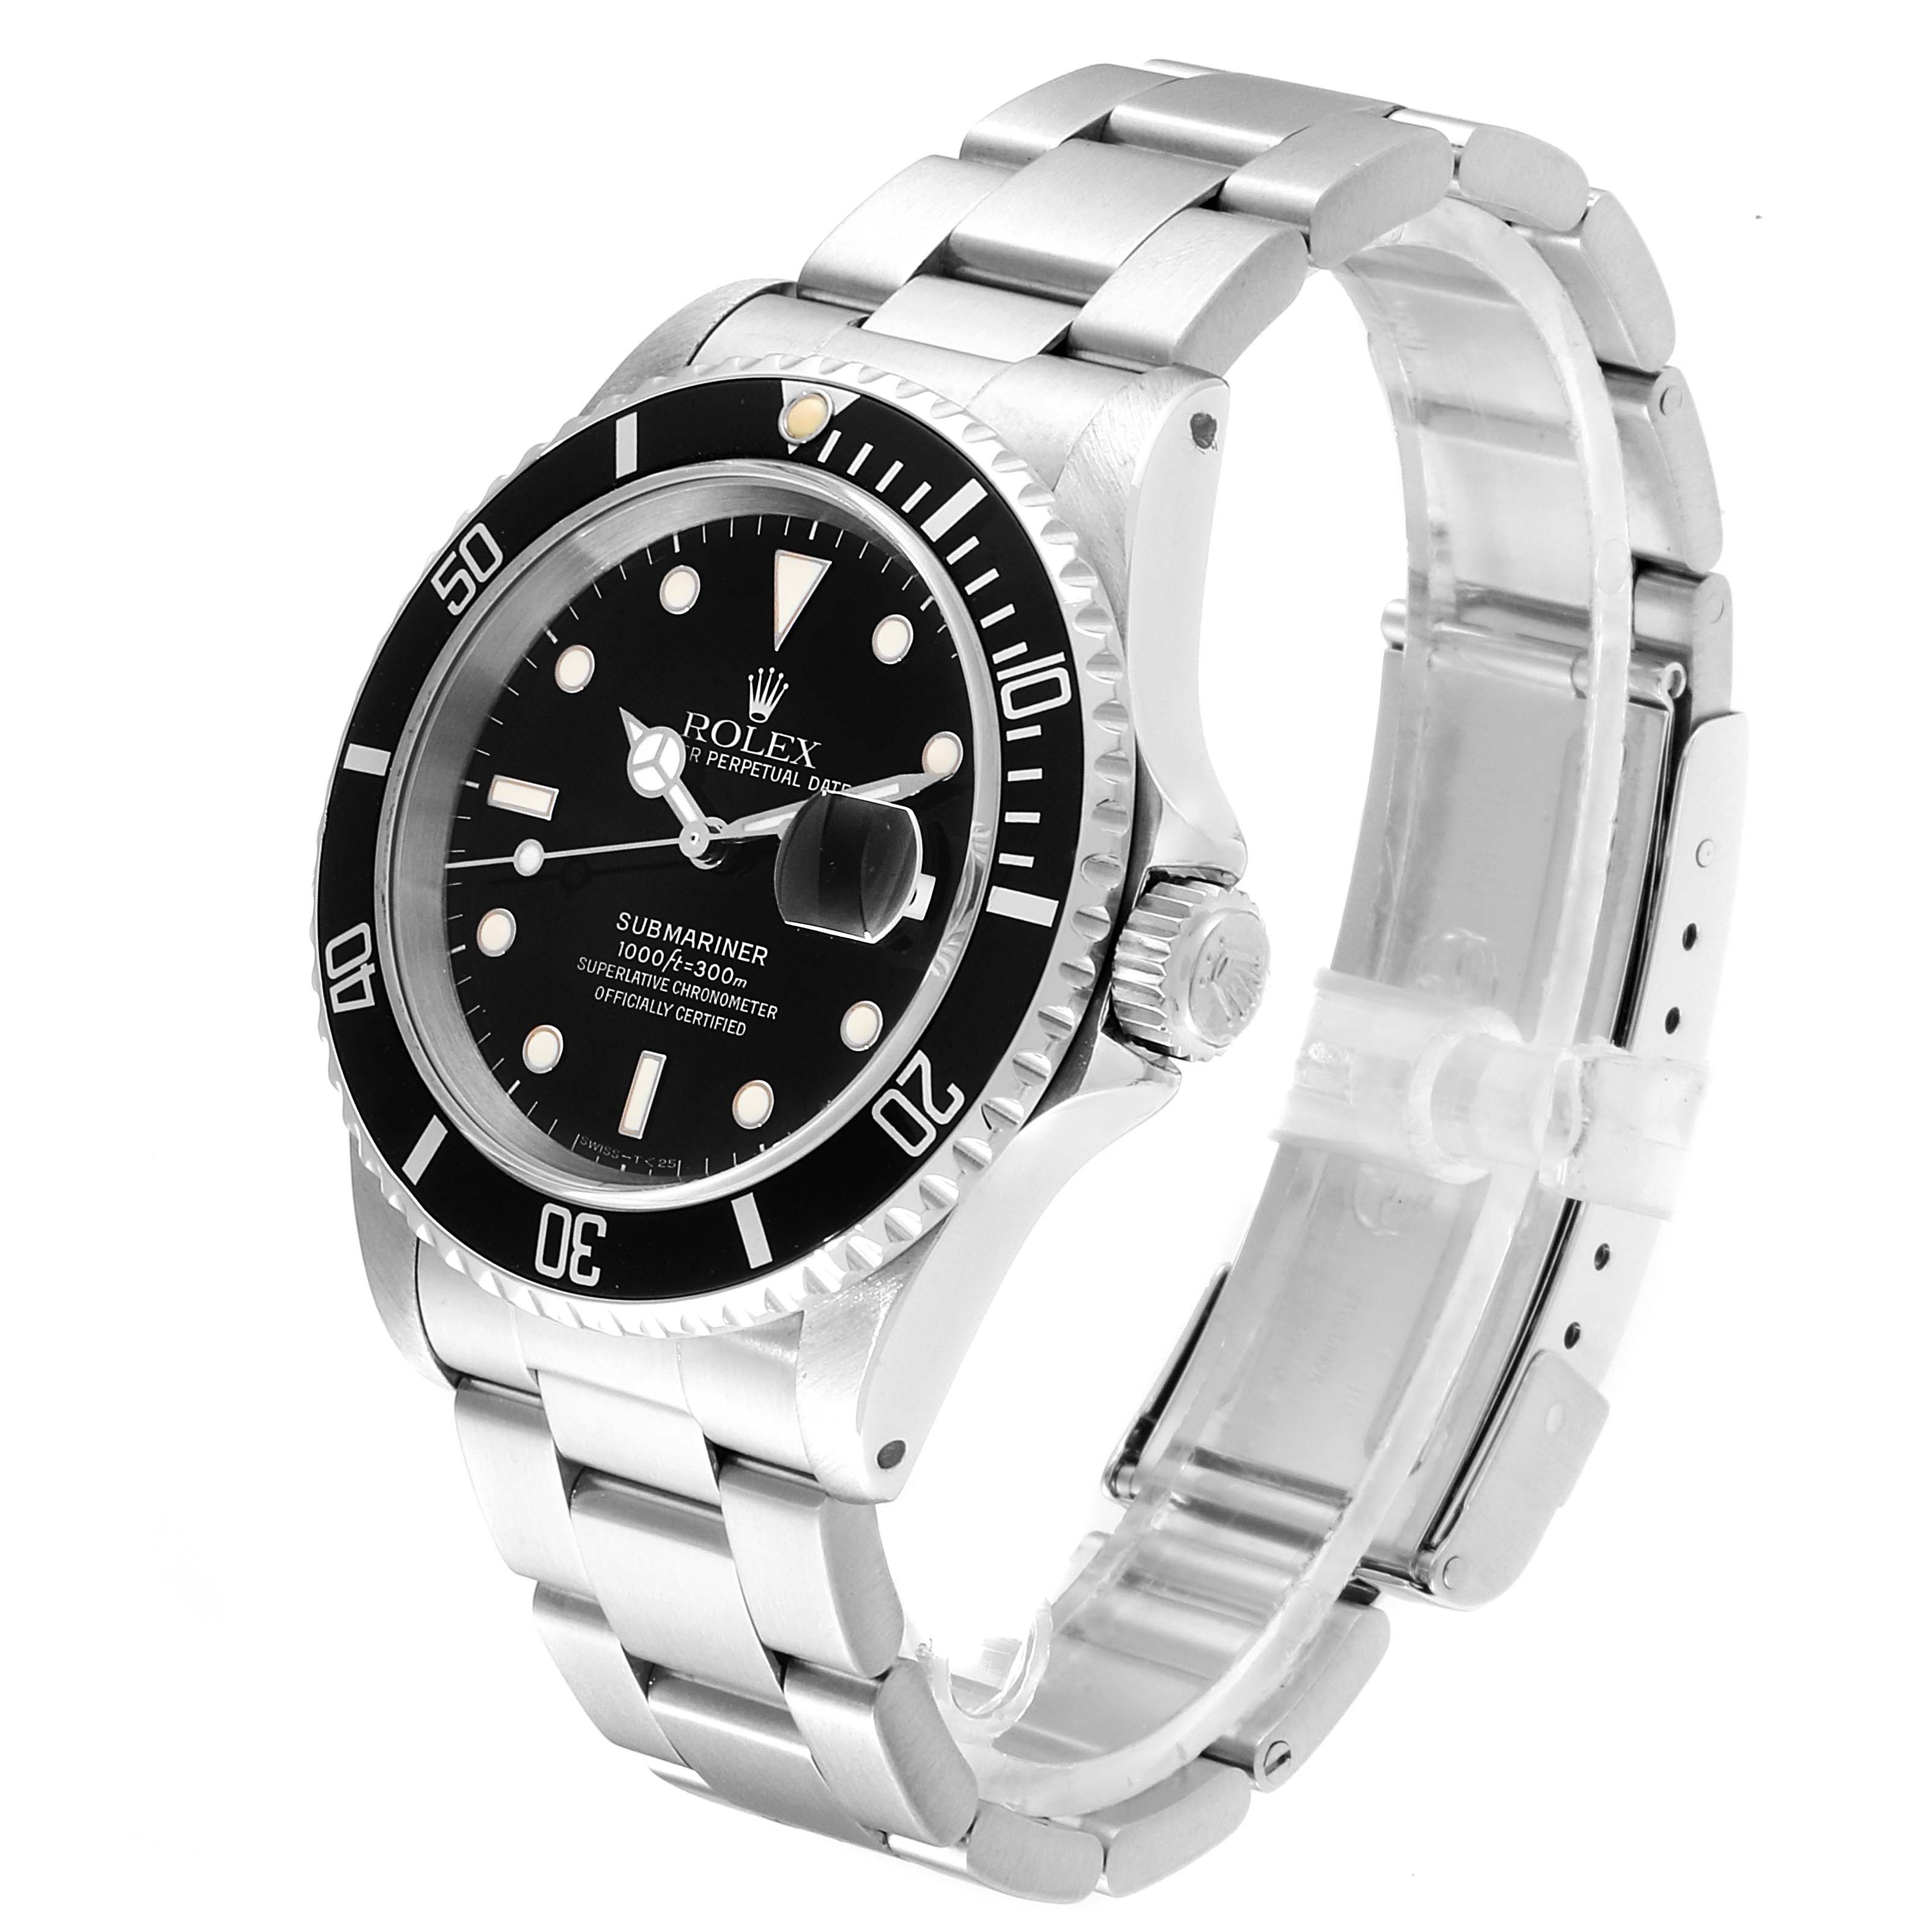 Rolex Submariner Date 40mm Stainless Steel Mens Watch 16610 Rolex Submariner Date Stainless Steel